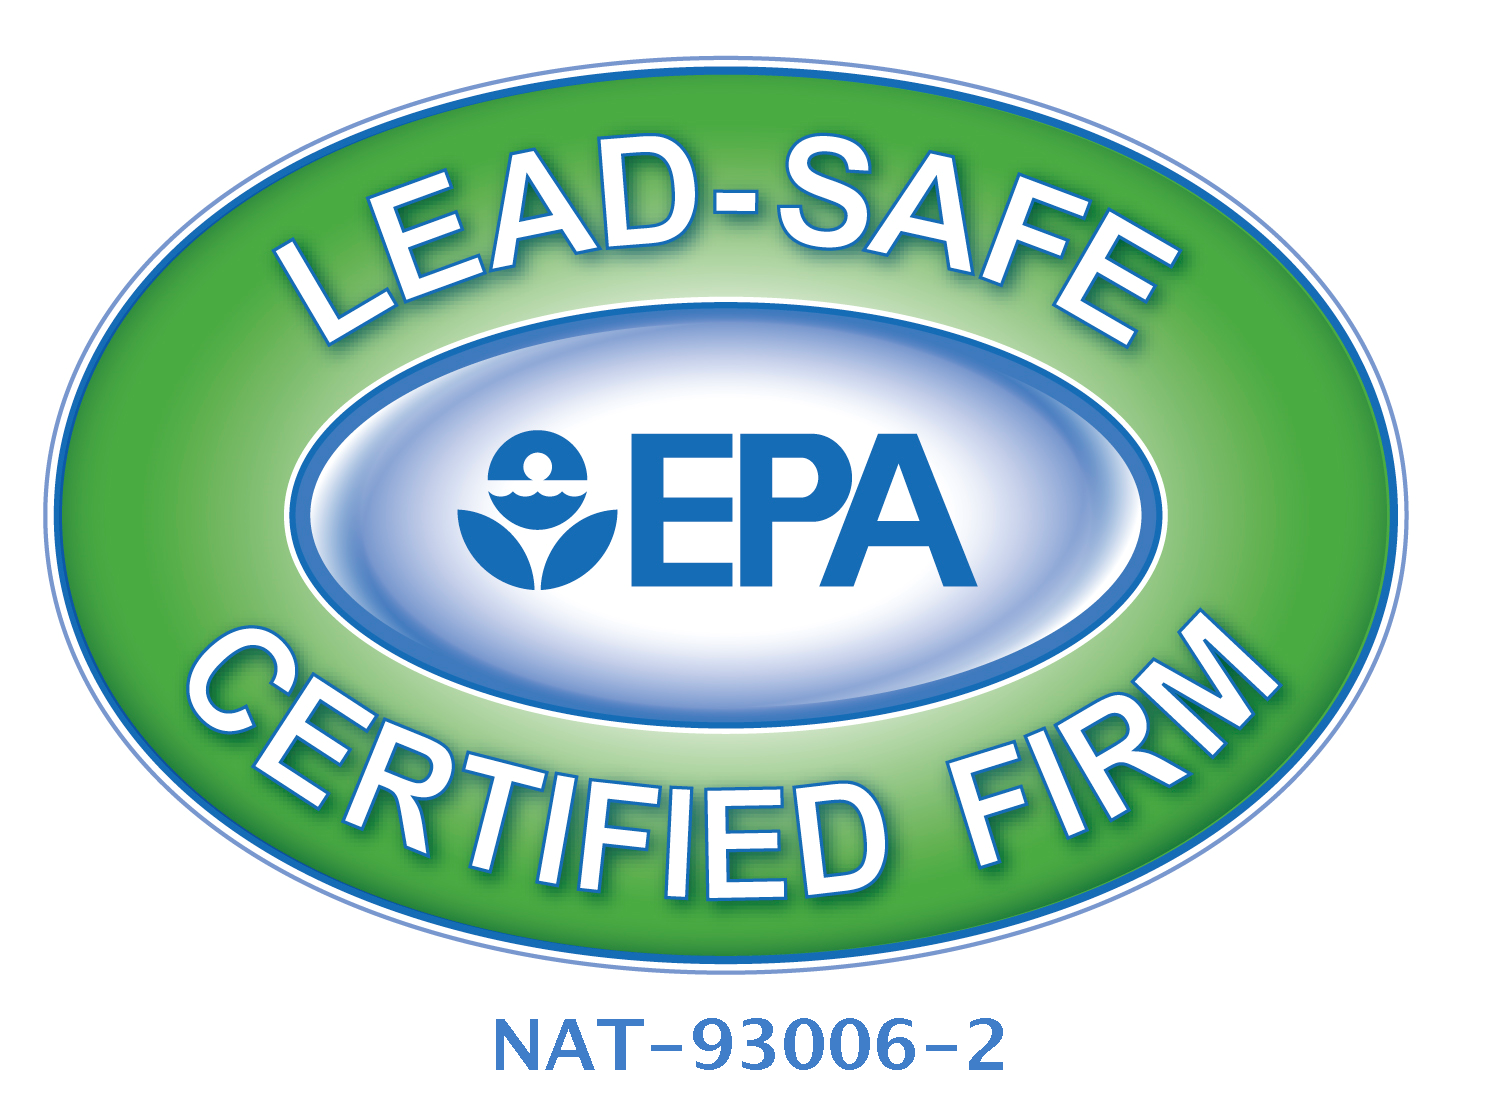 Lead-Safe Certified Firm logo